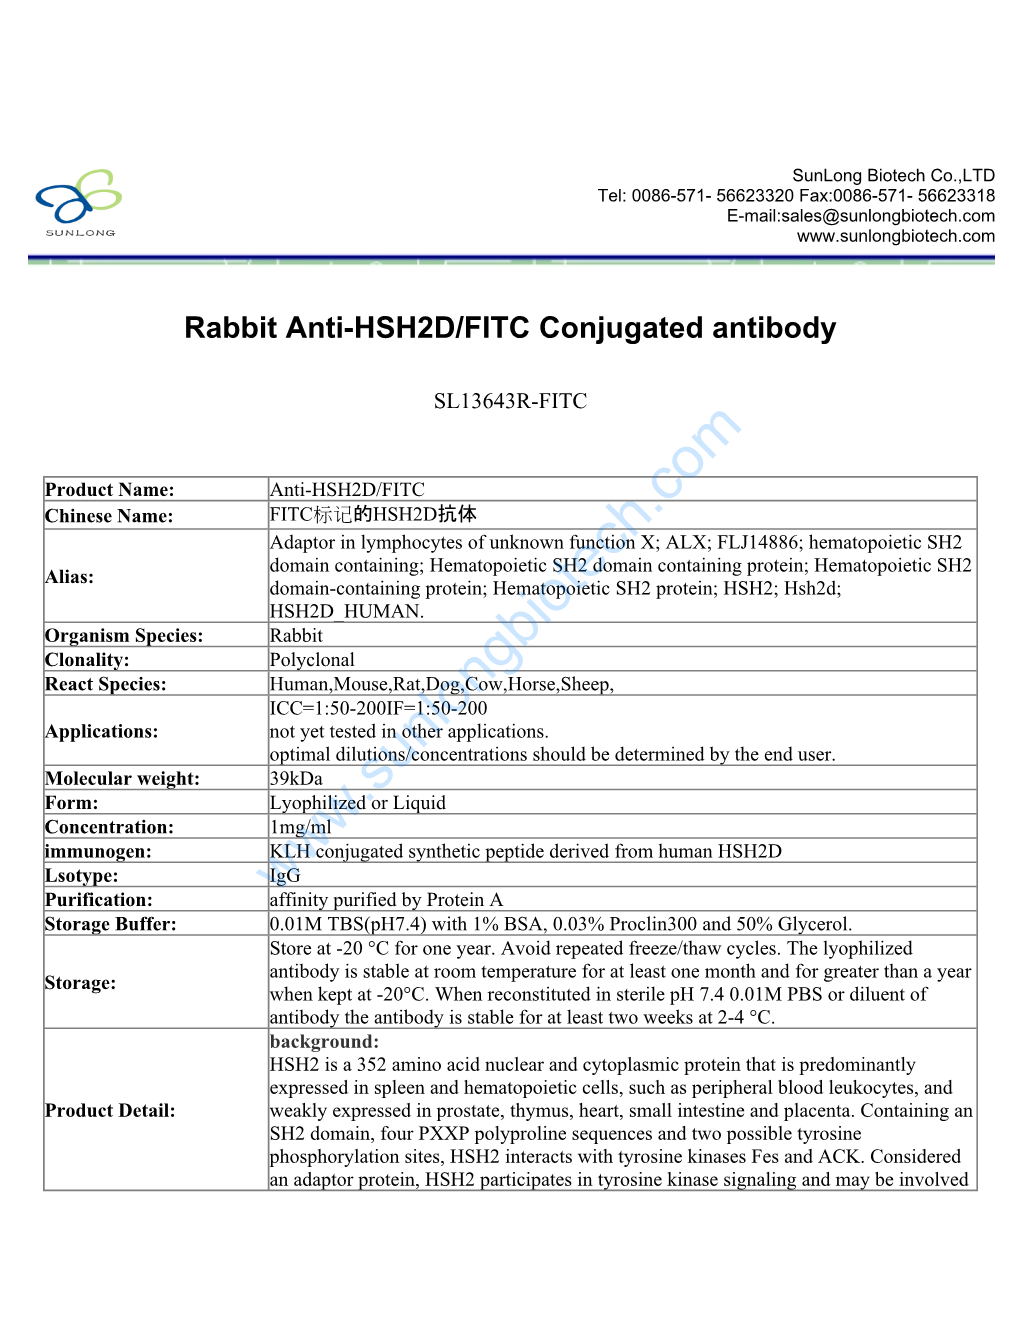 Rabbit Anti-HSH2D/FITC Conjugated Antibody